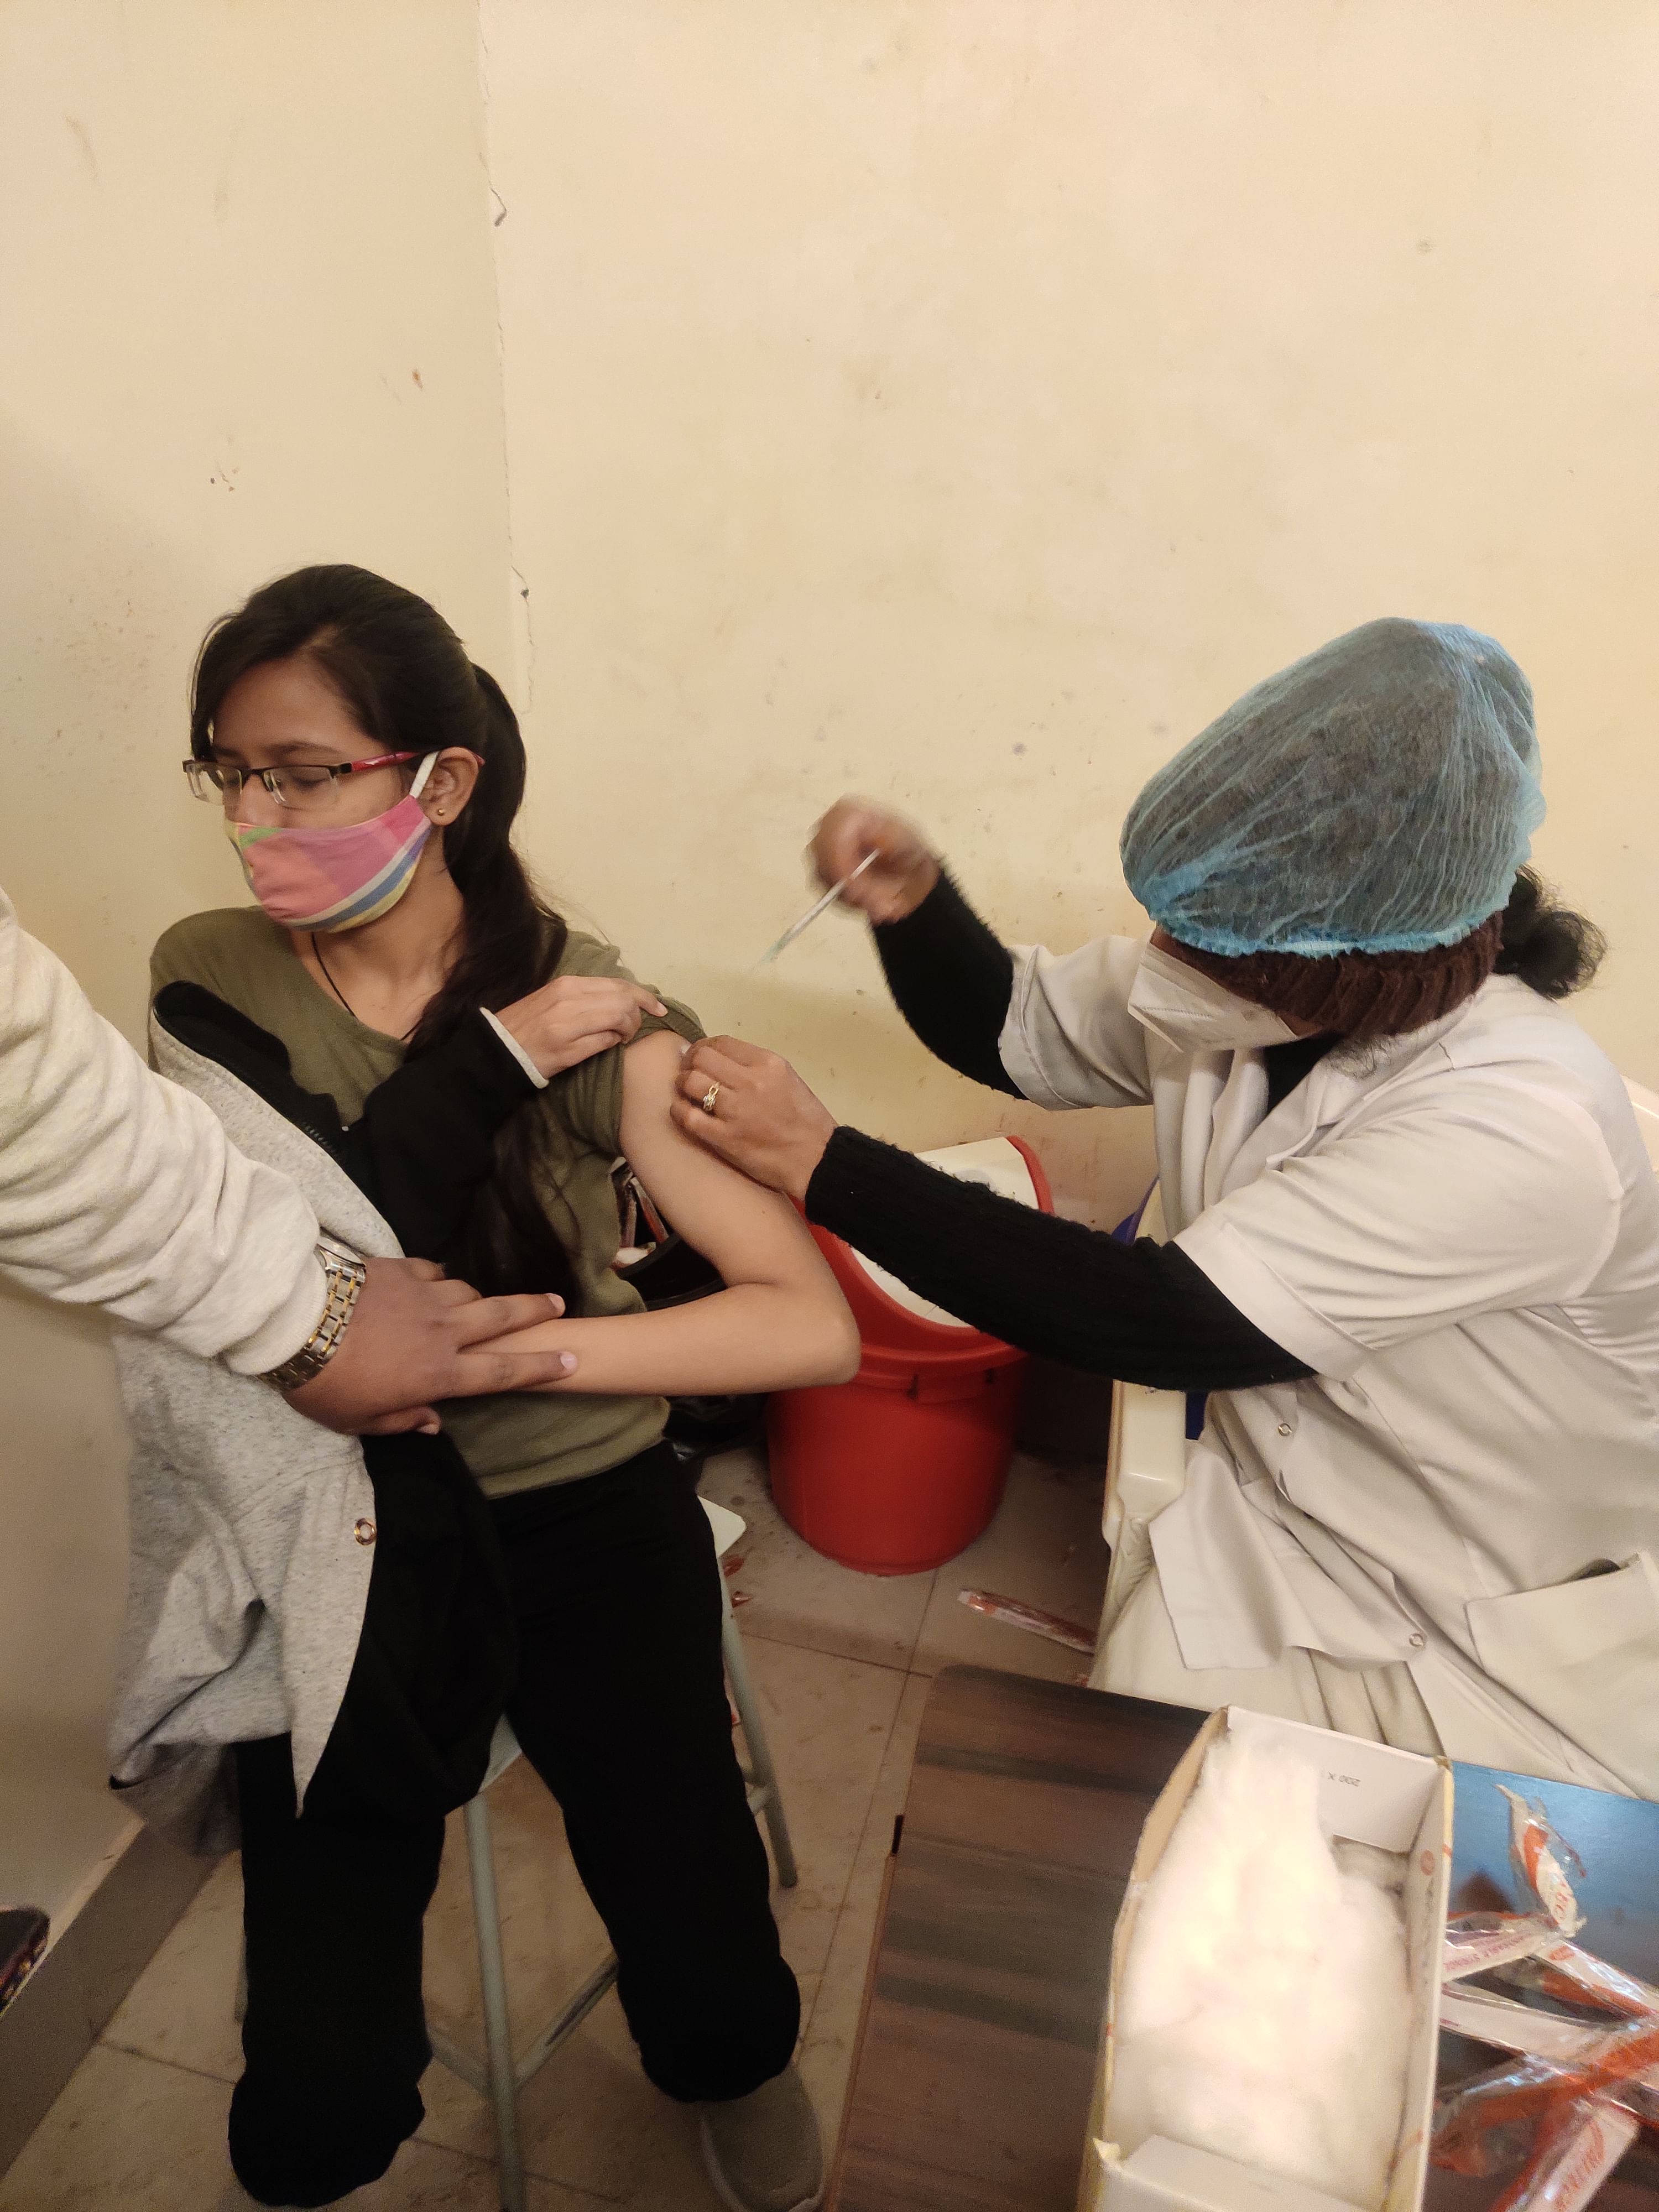 Un adolescent reçoit un vaccin anti-covid à l’hôpital commun Pandit Deendayal Upadhyay